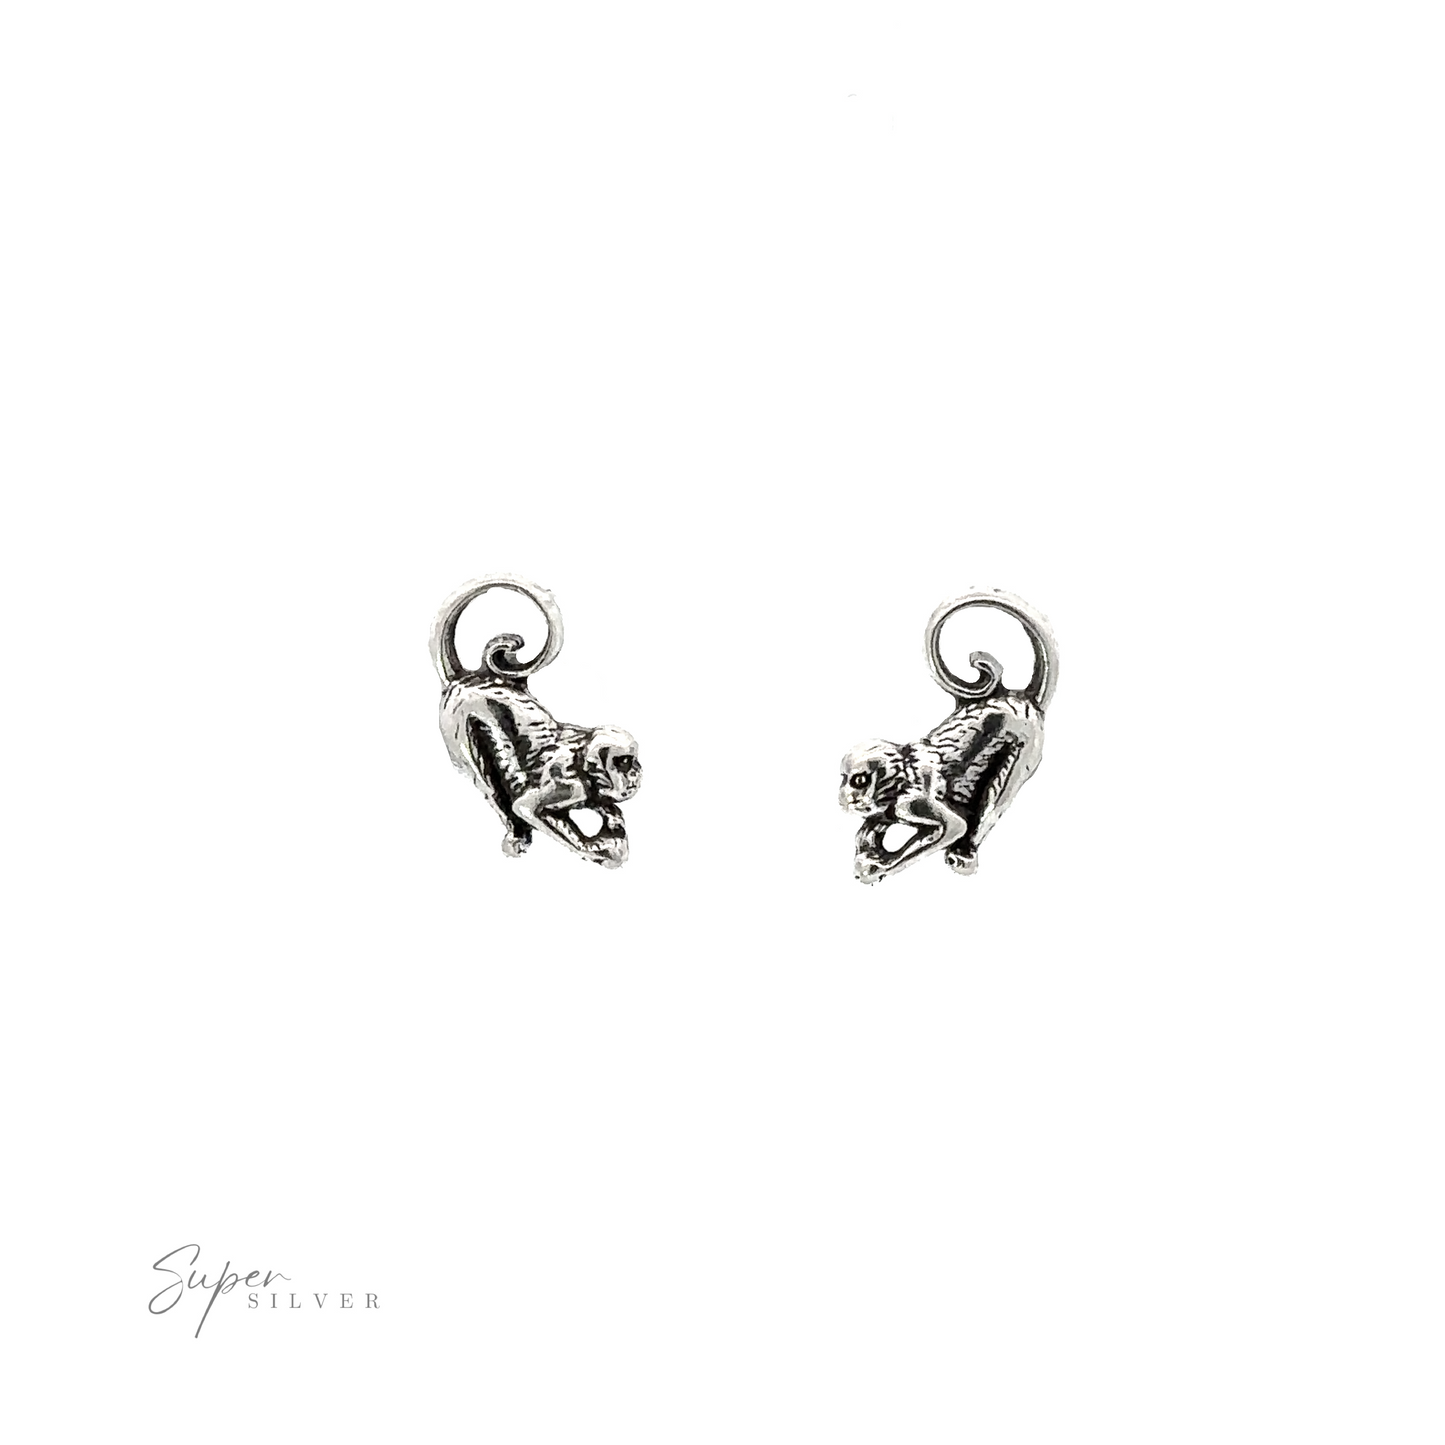 A pair of Monkey Studs earrings.